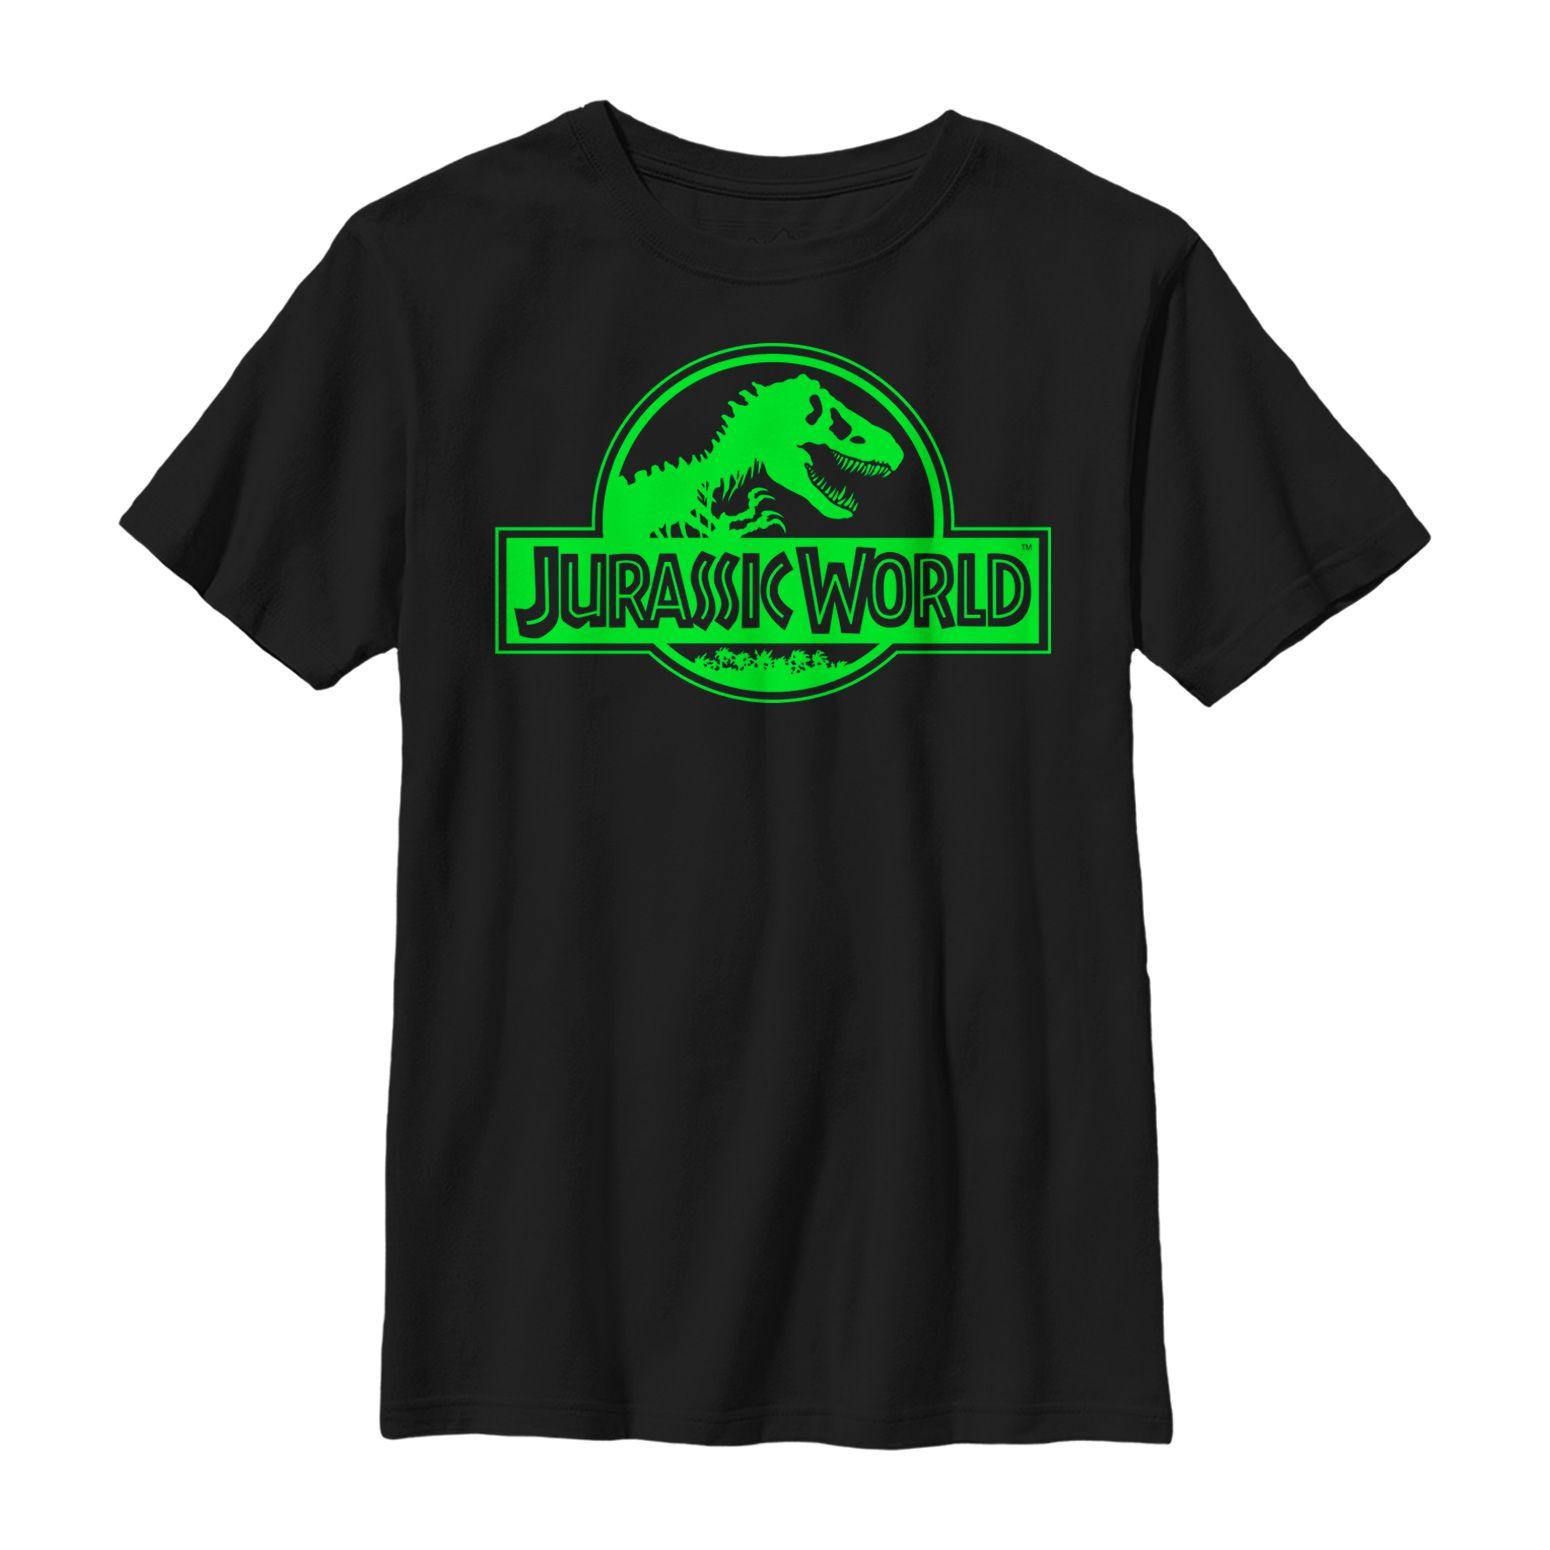 T-Rex Logo - Details about Jurassic World Simple T. Rex Logo Boys Graphic T Shirt